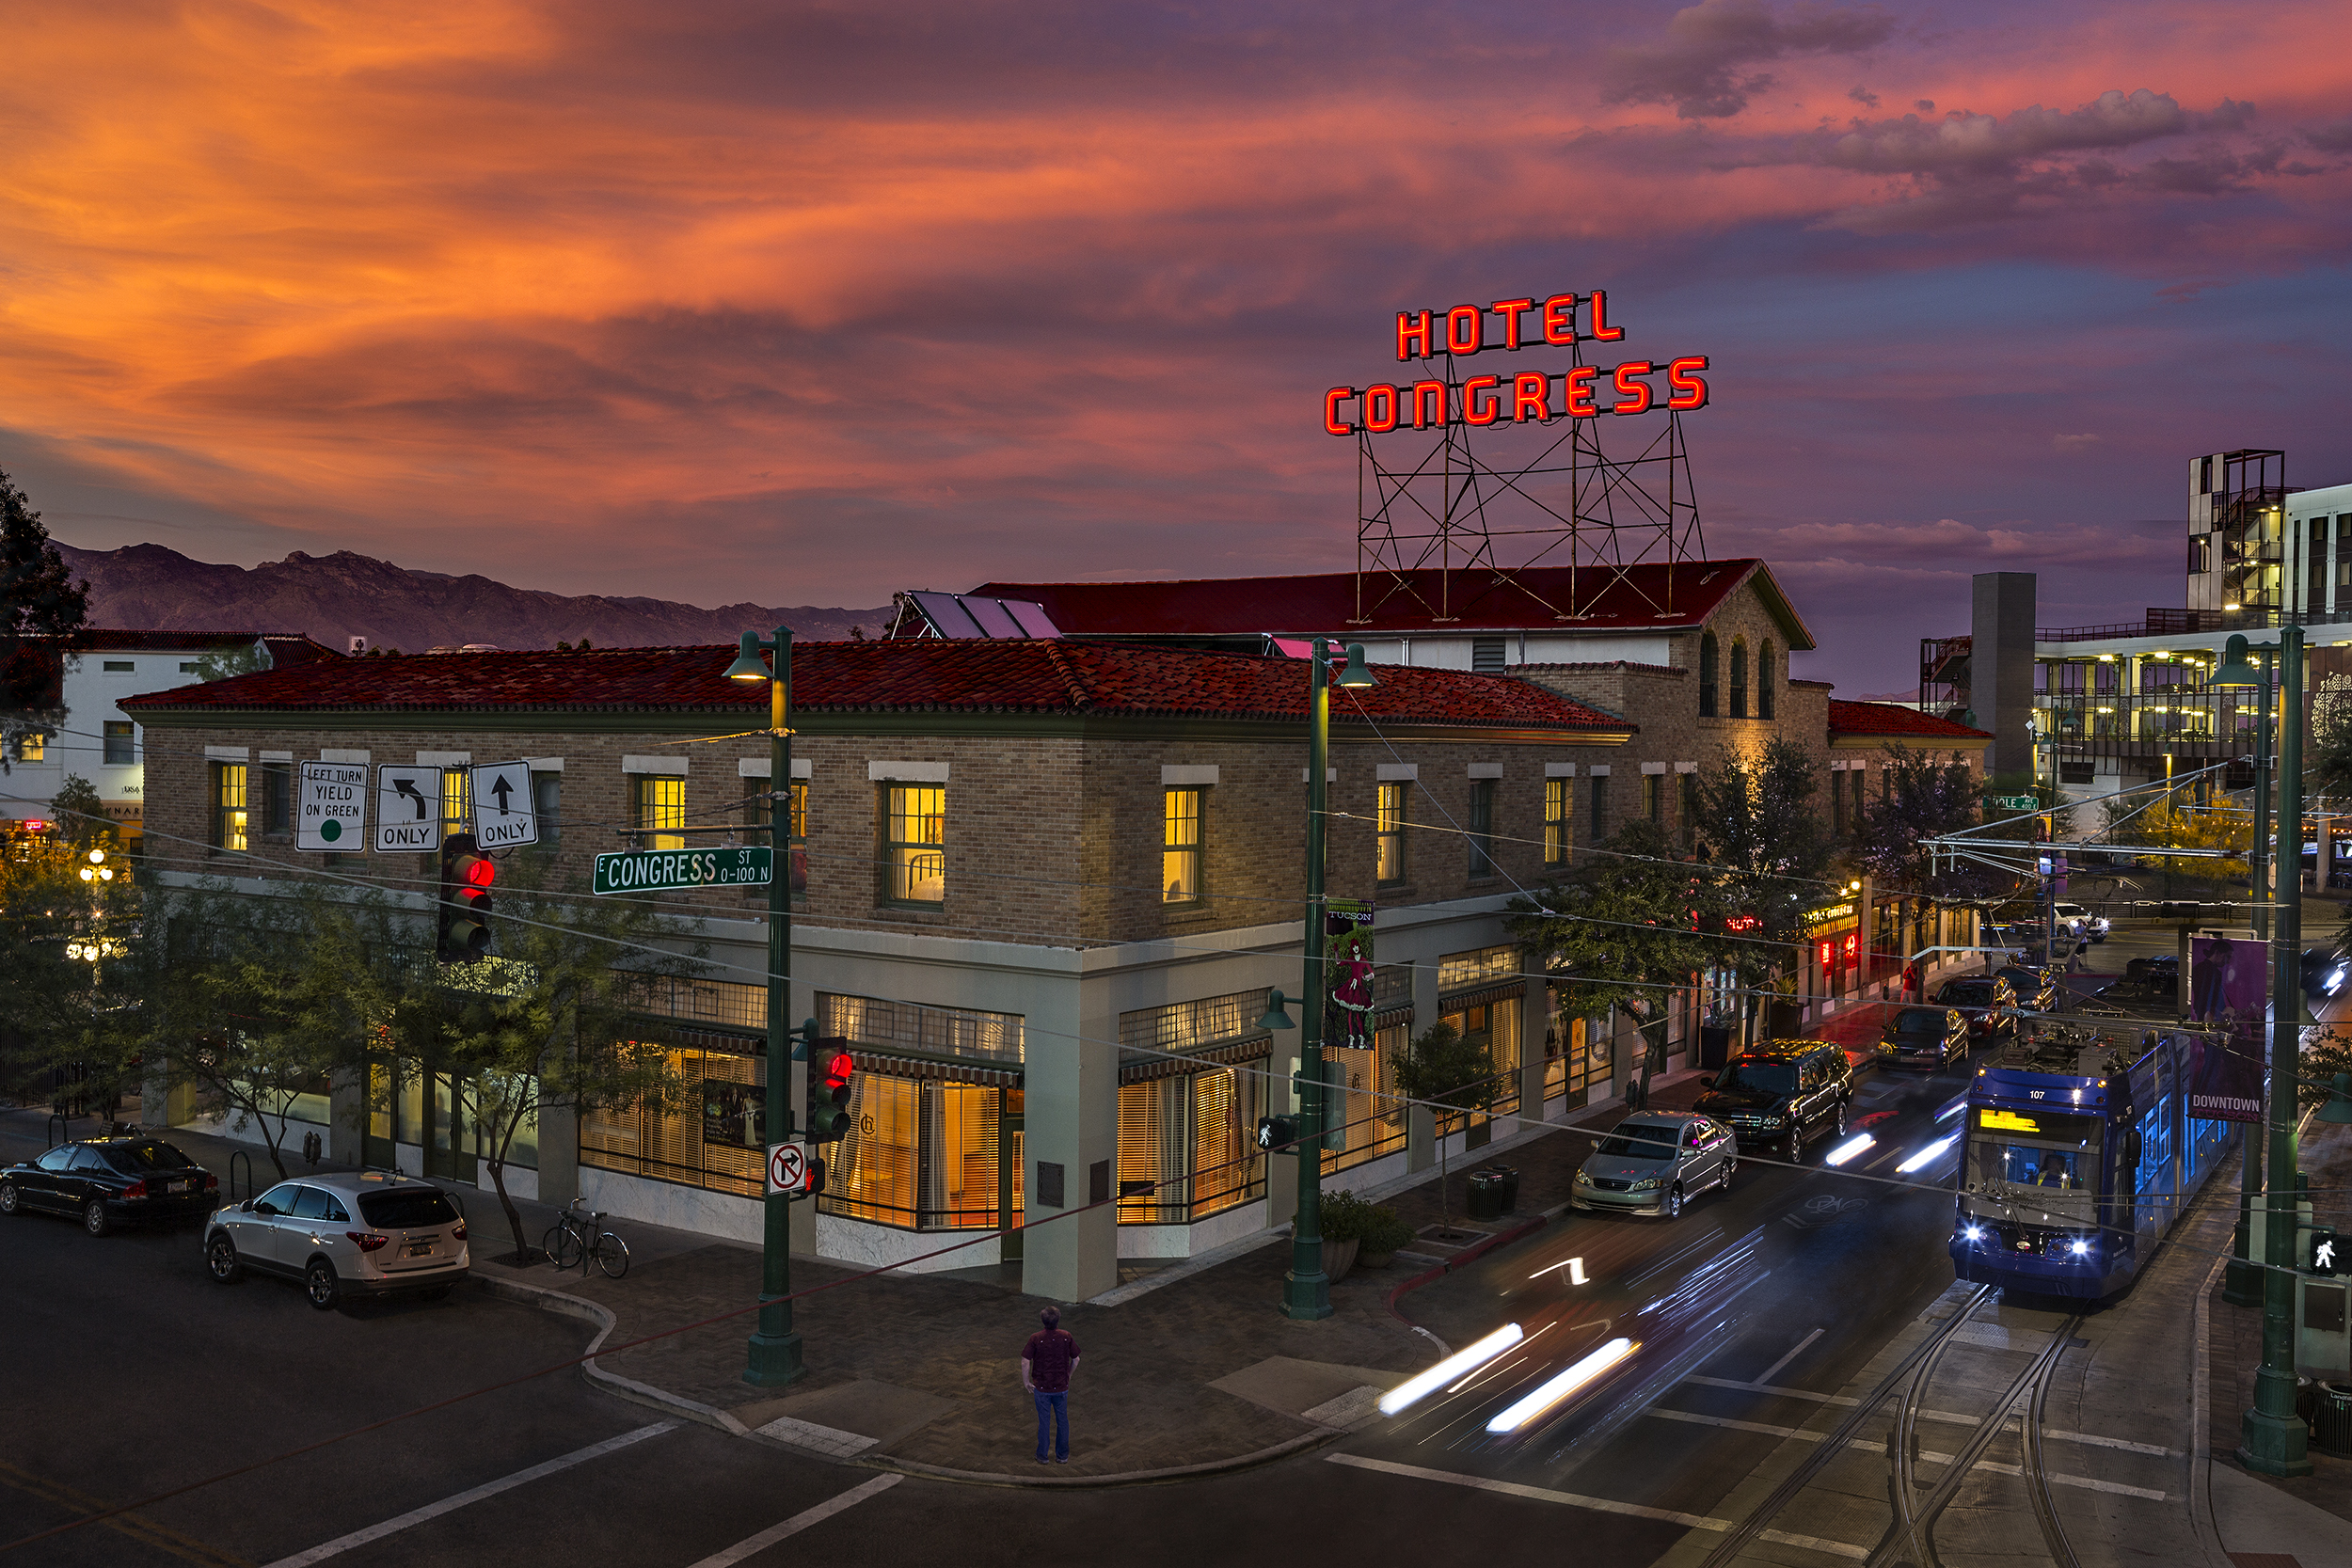 Historic Hotel Congress – Tucson Arizona